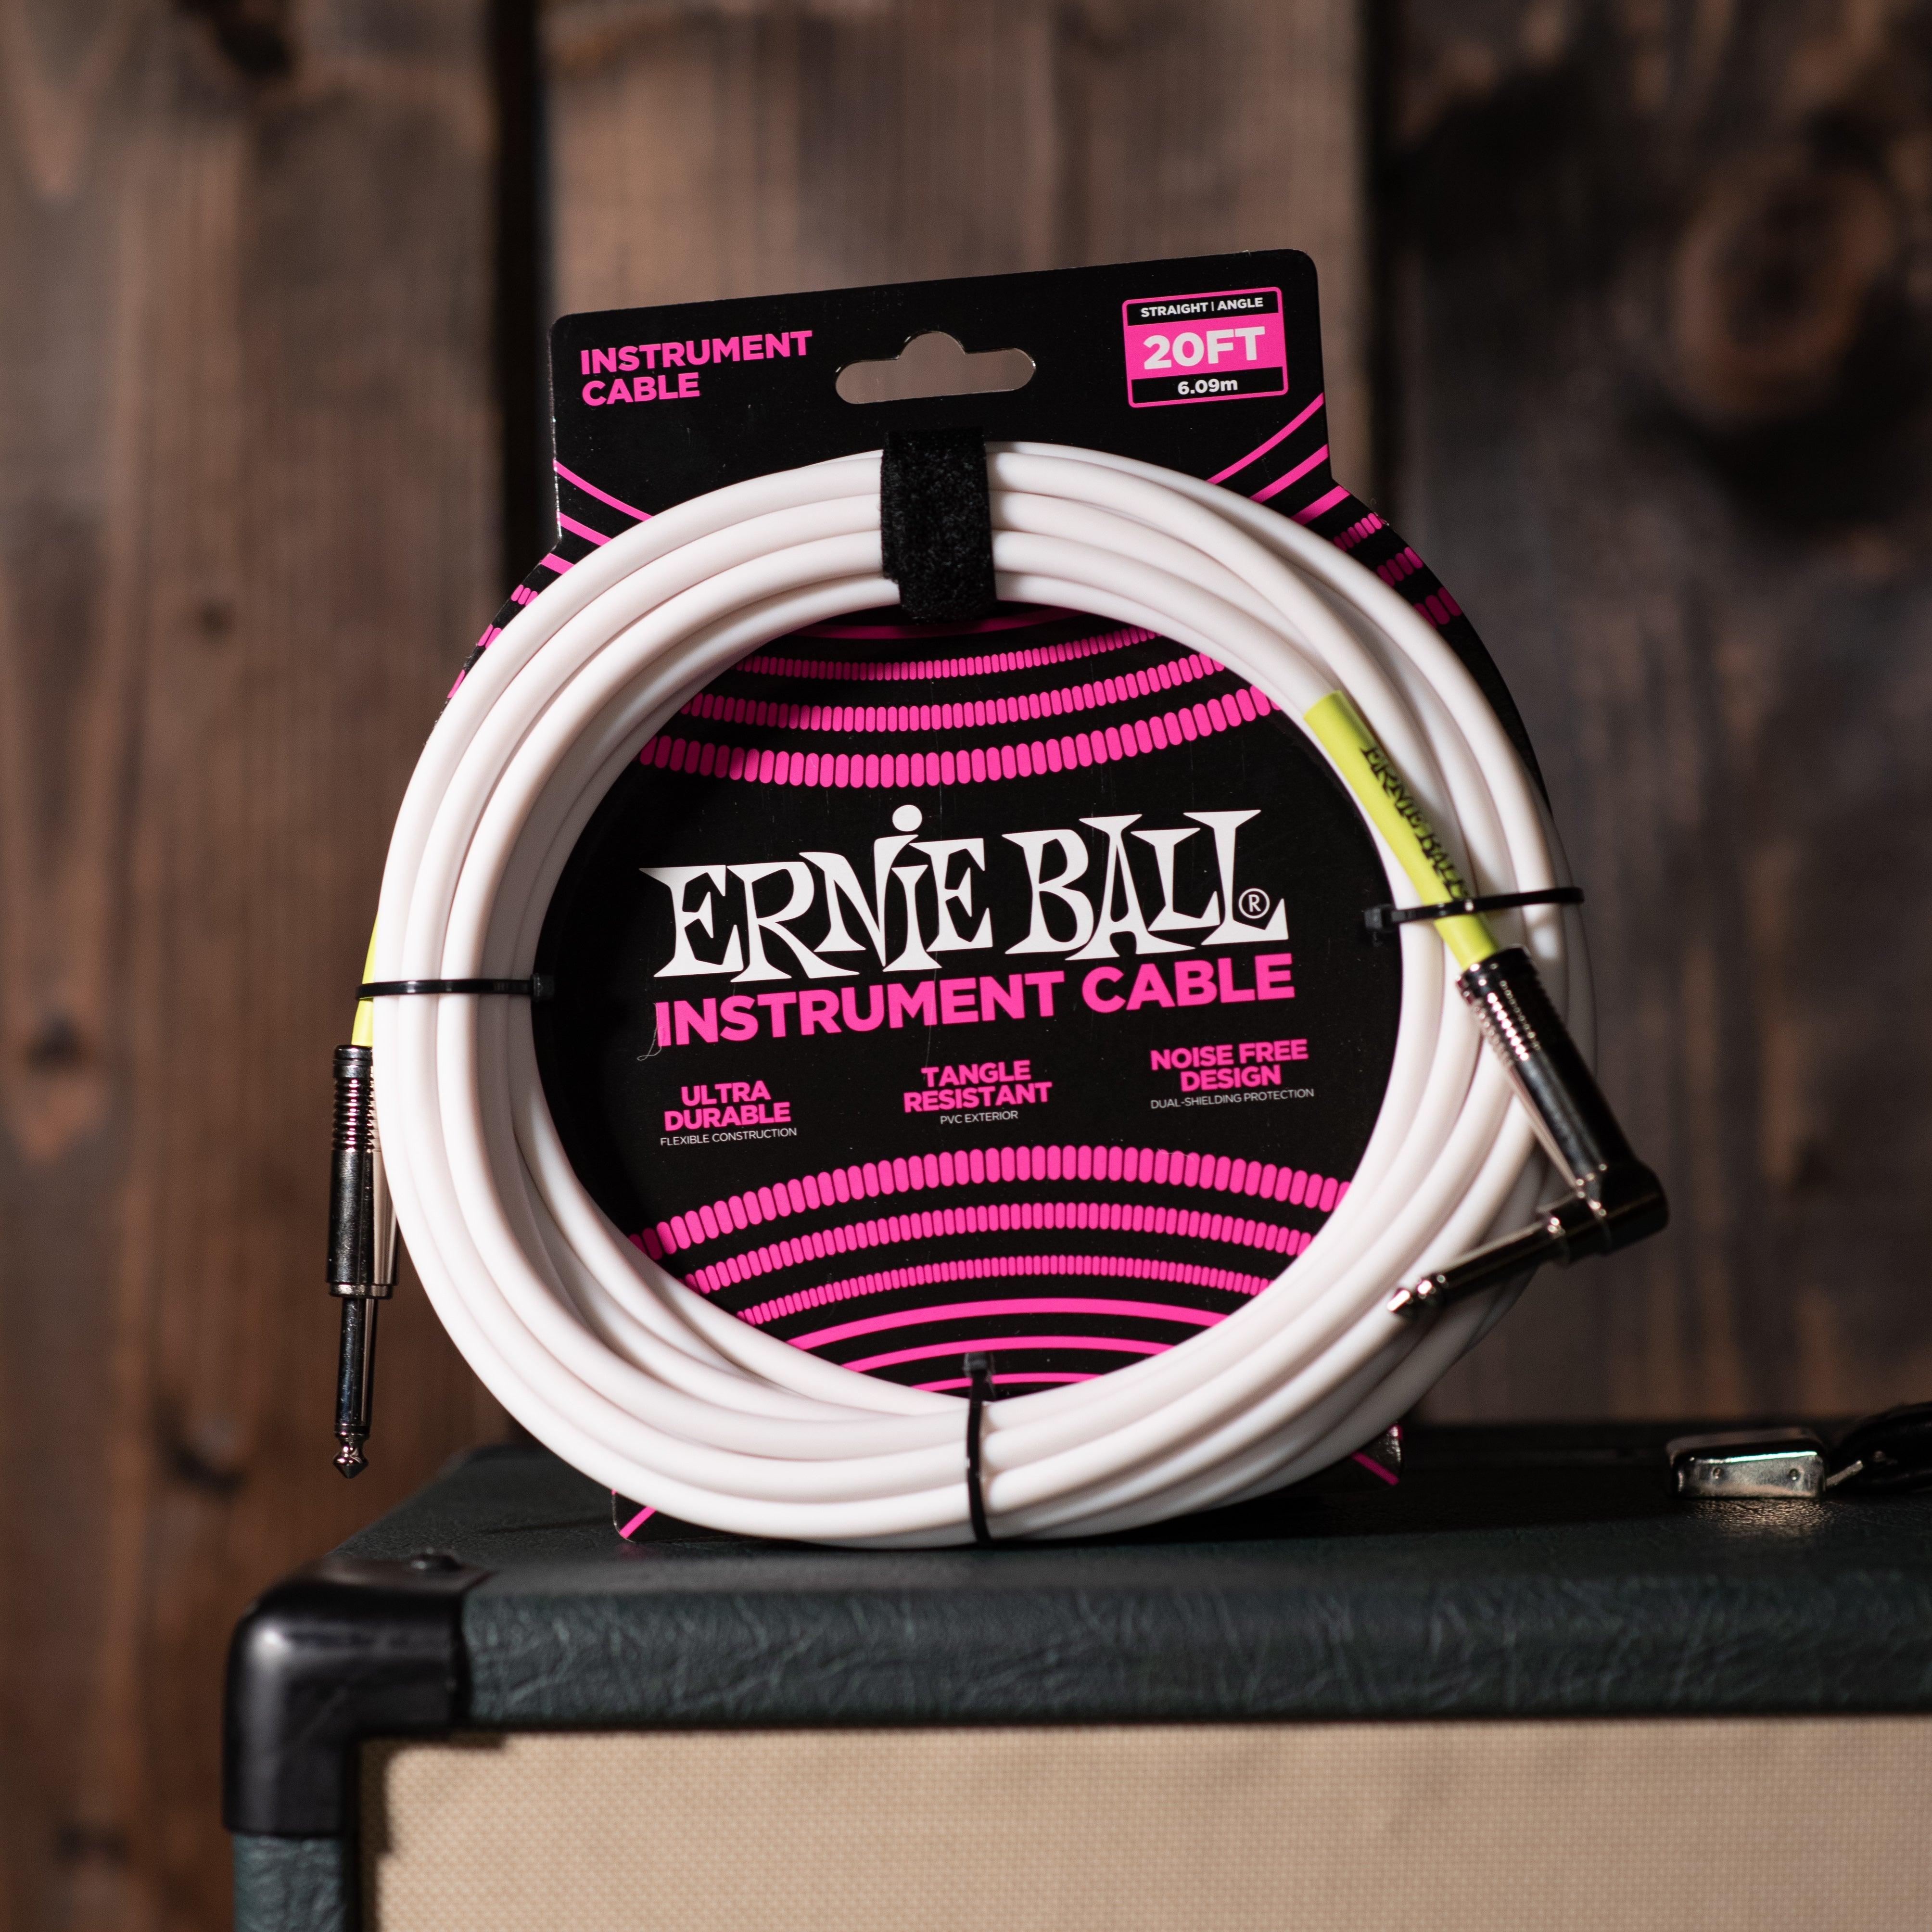 Ernie Ball Instrument Cable White 20 ft. - Impulse Music Co.